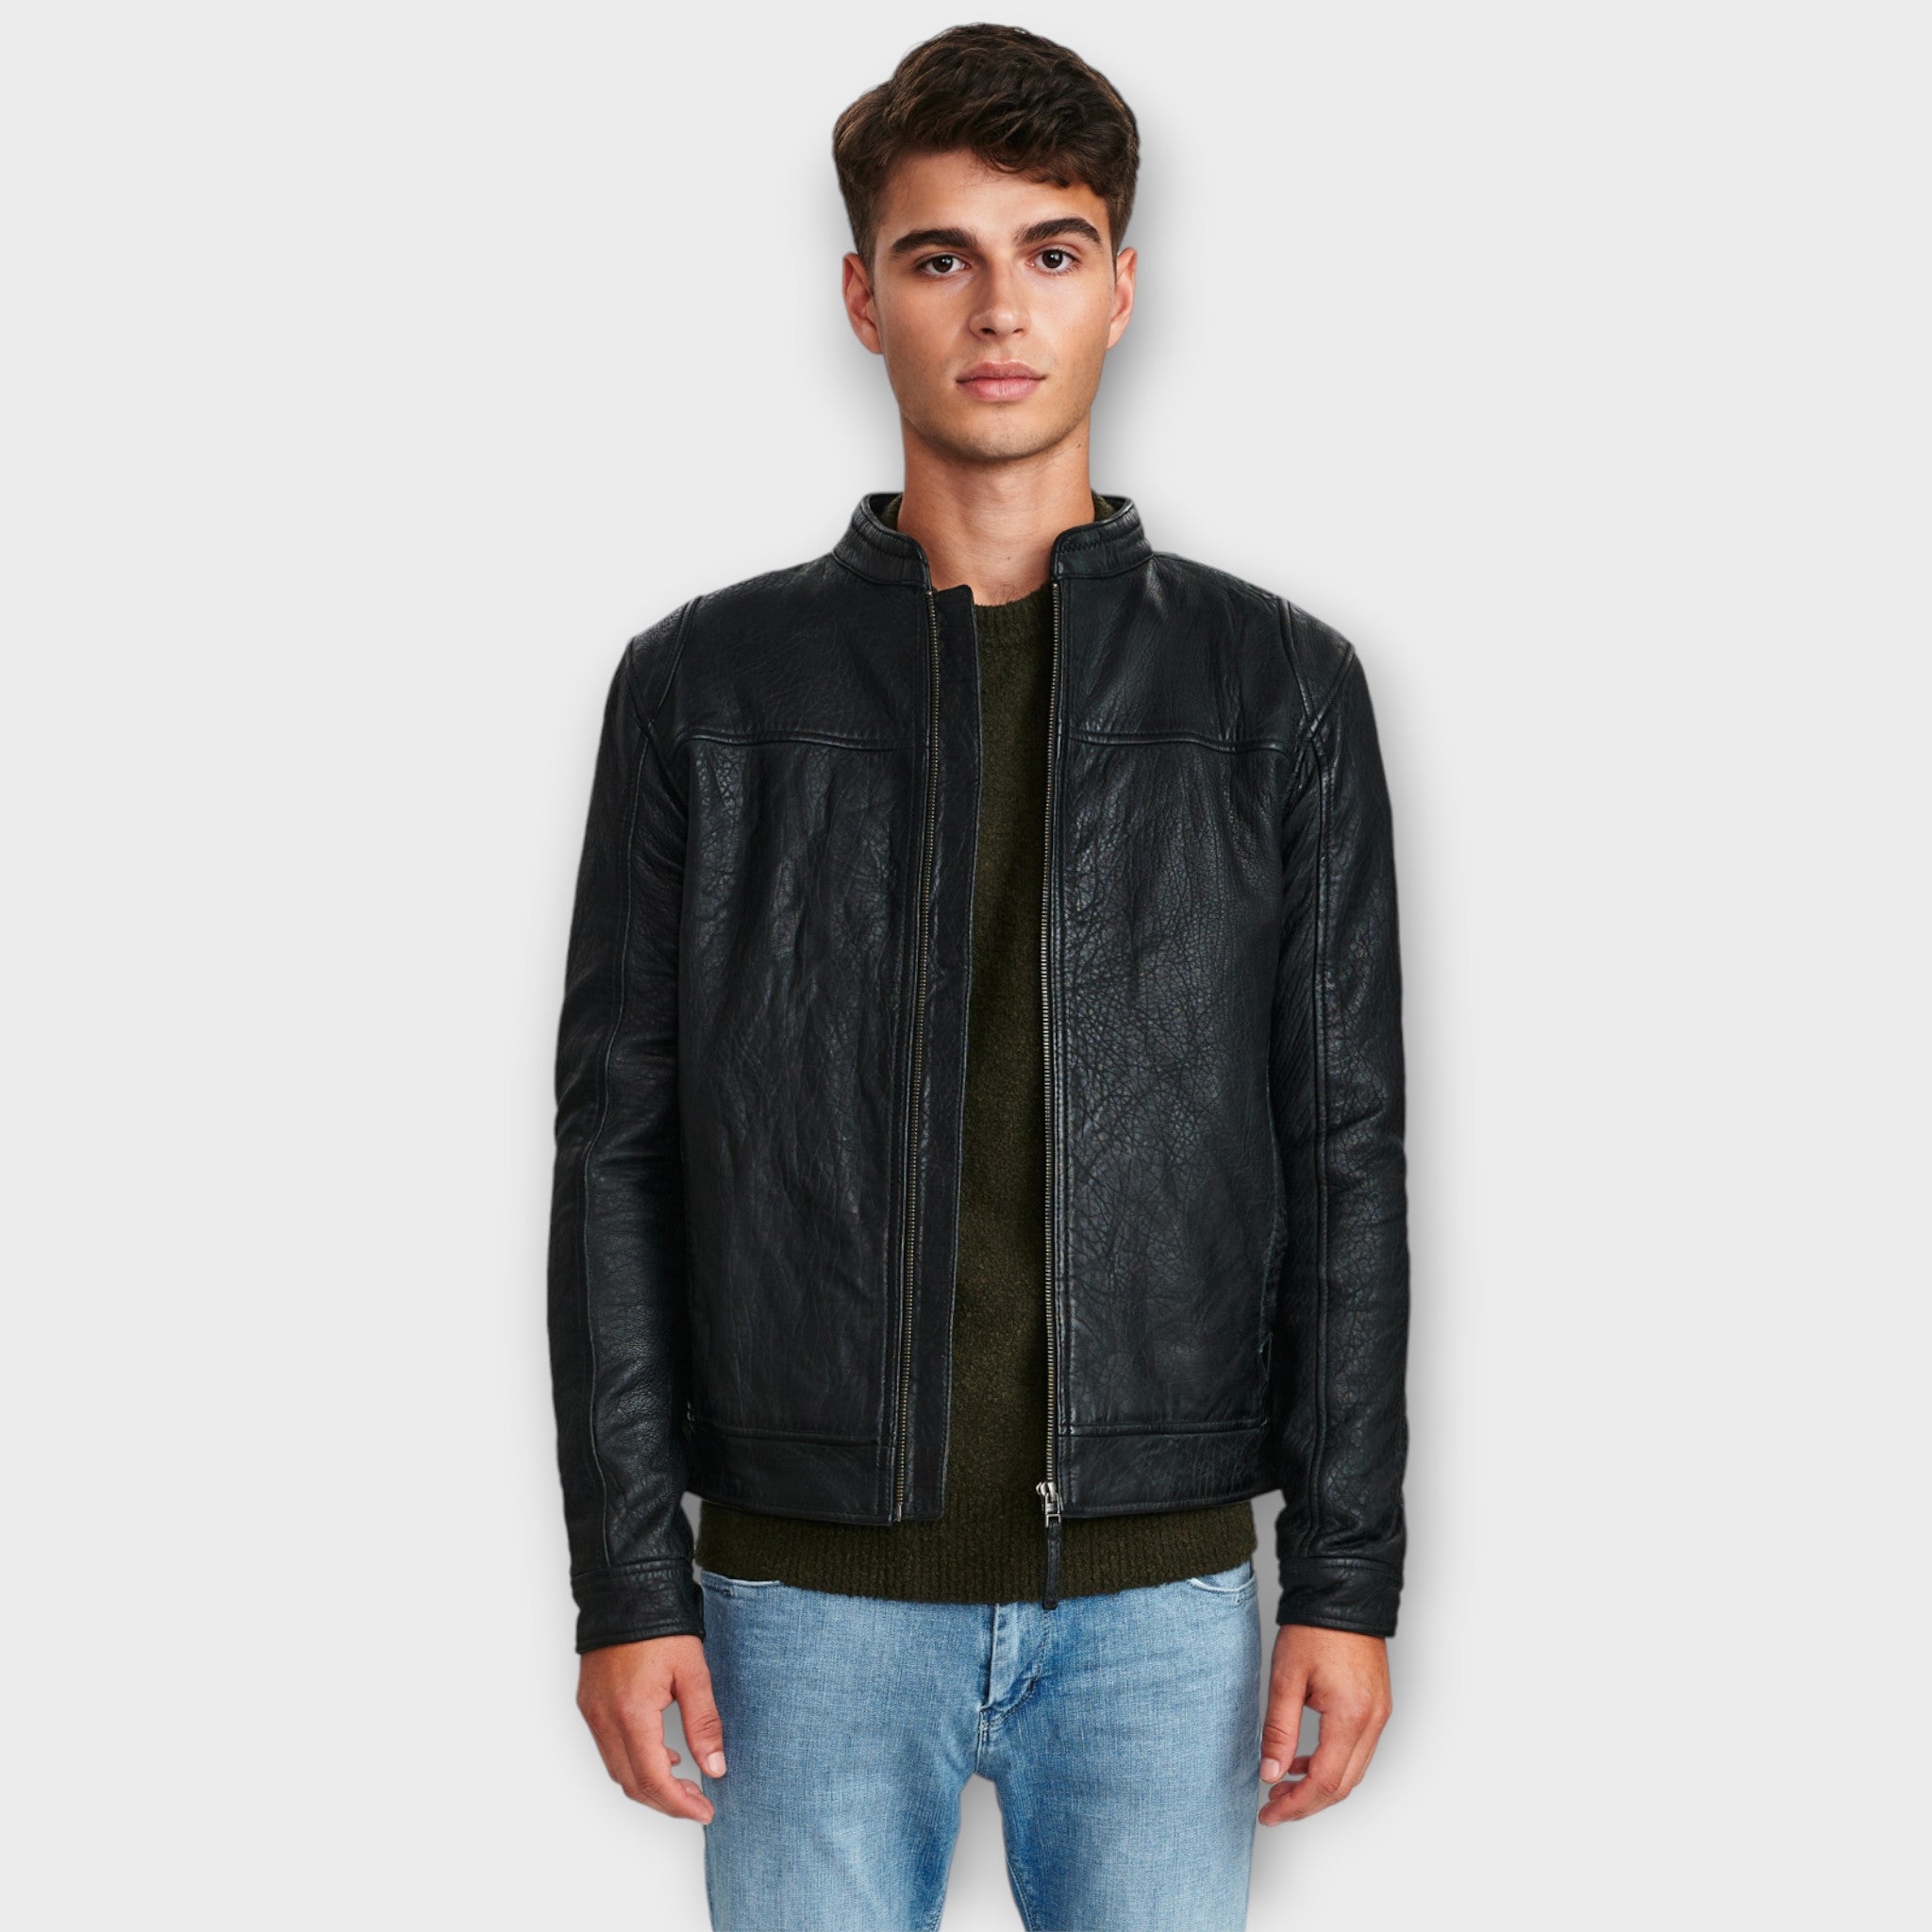 Benton Black Leather Jacket - Black - The Sons online